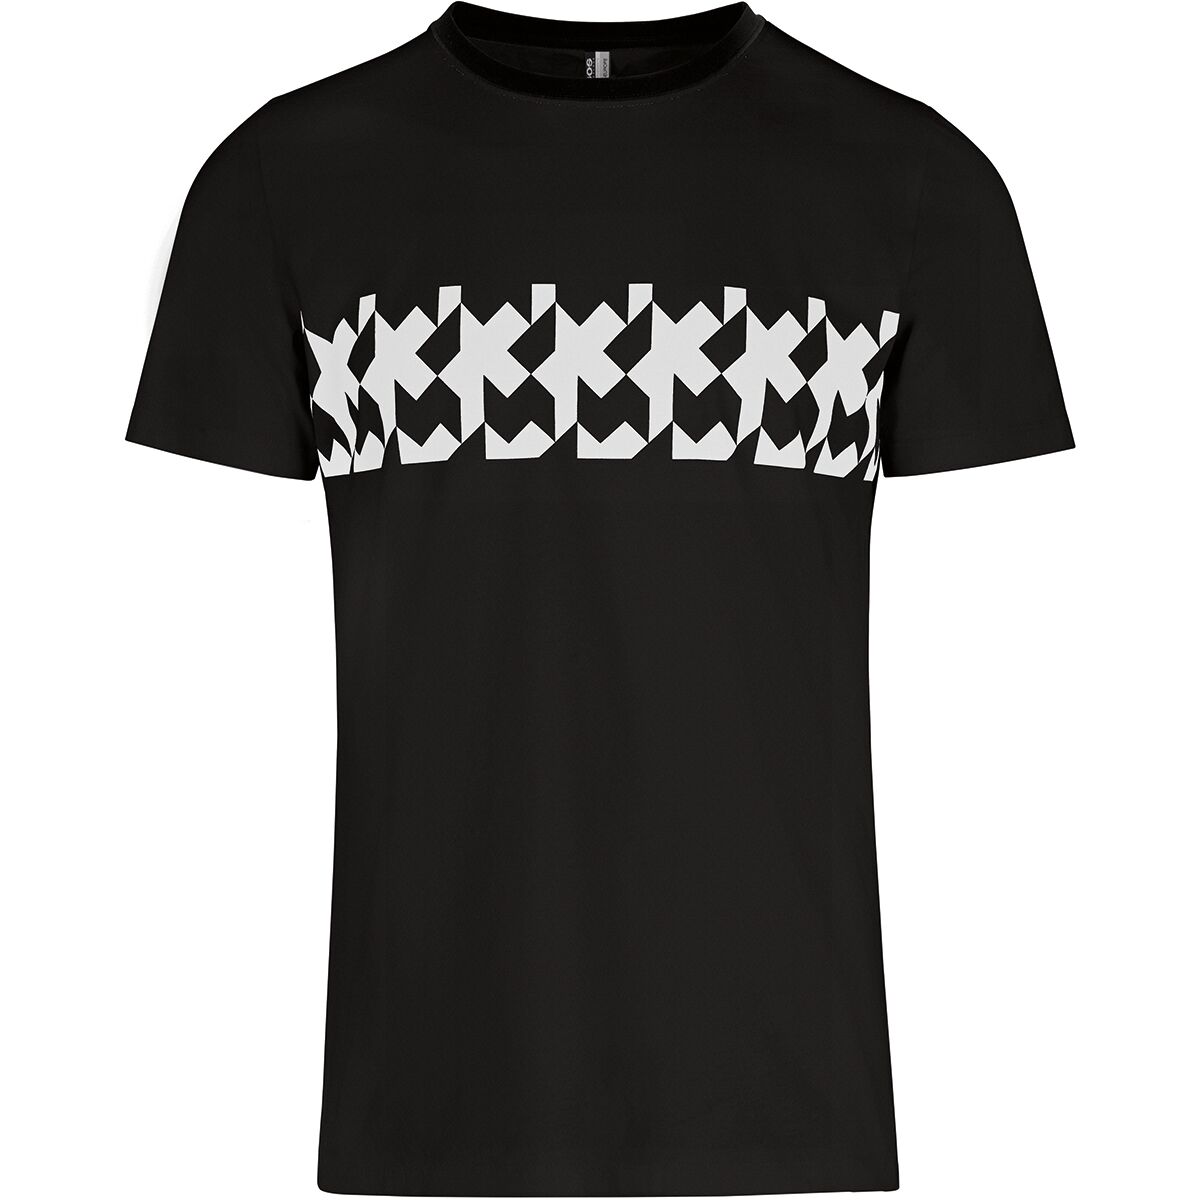 Assos RS Griffe T-Shirt - Men's